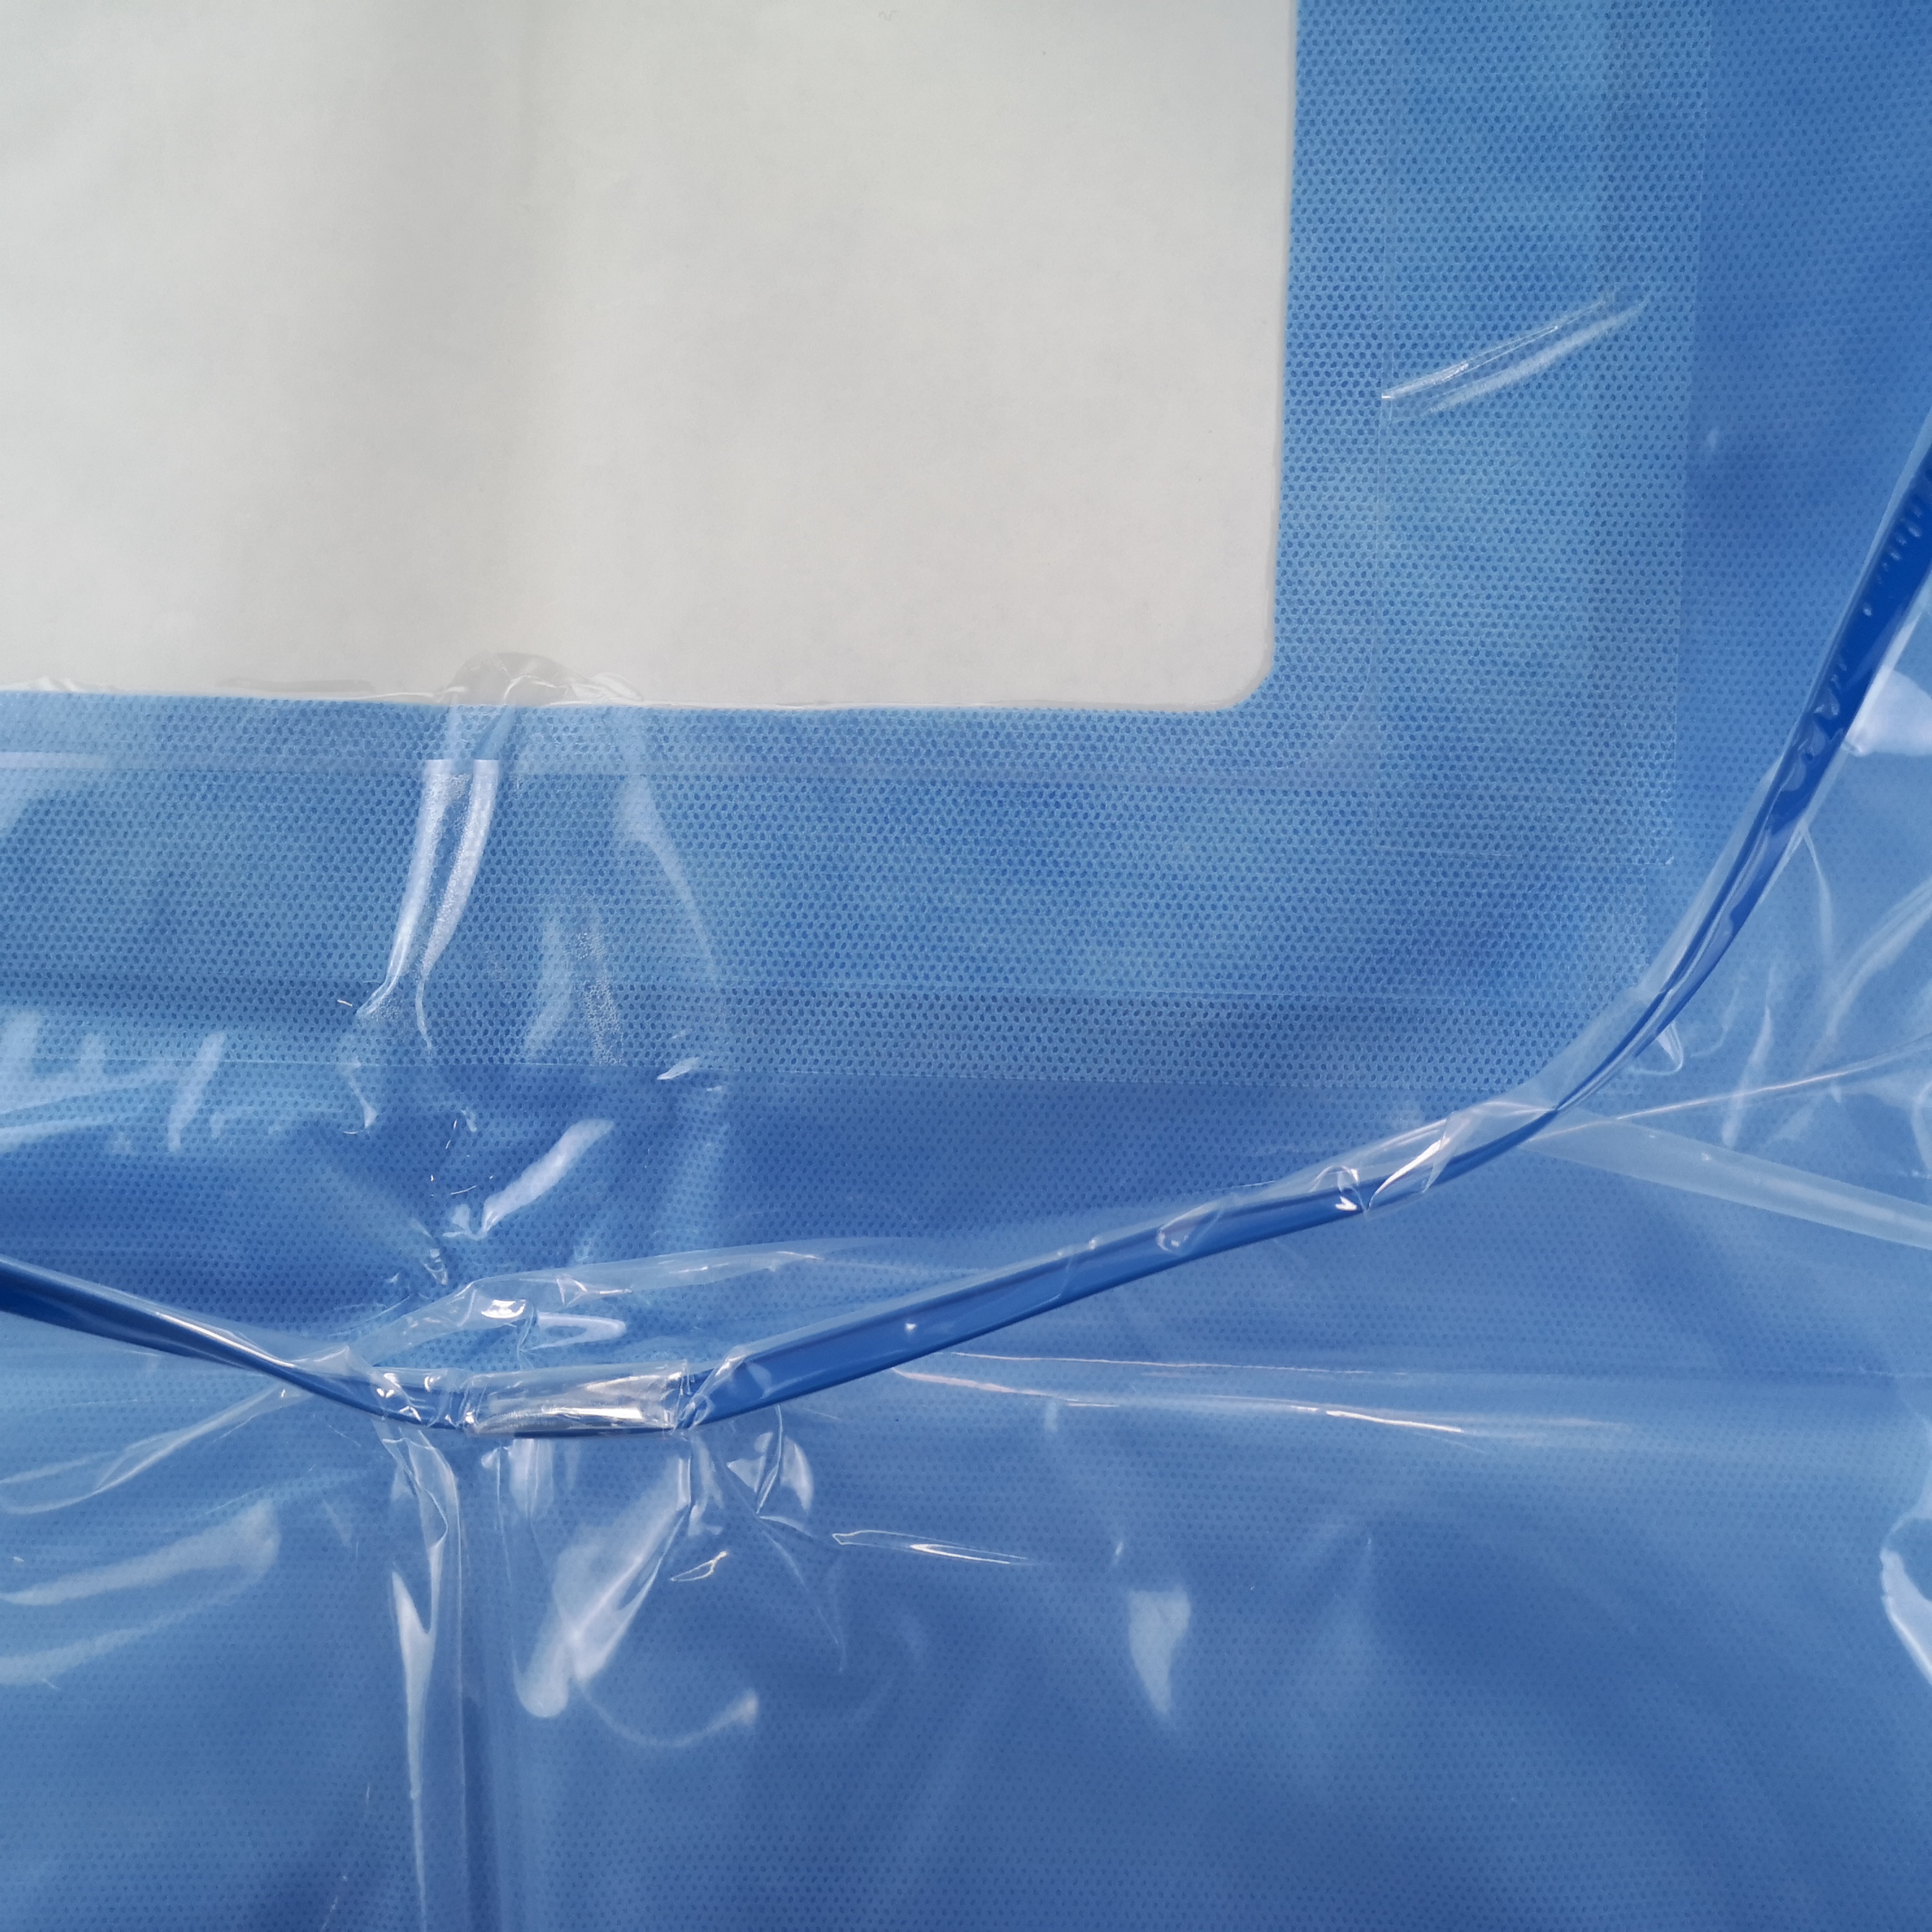 OEM ที่ขายดีที่สุด Medical Cesarean Section Birth Drape Kits ผู้ผลิตพร้อมใบรับรอง CE ISO13485
